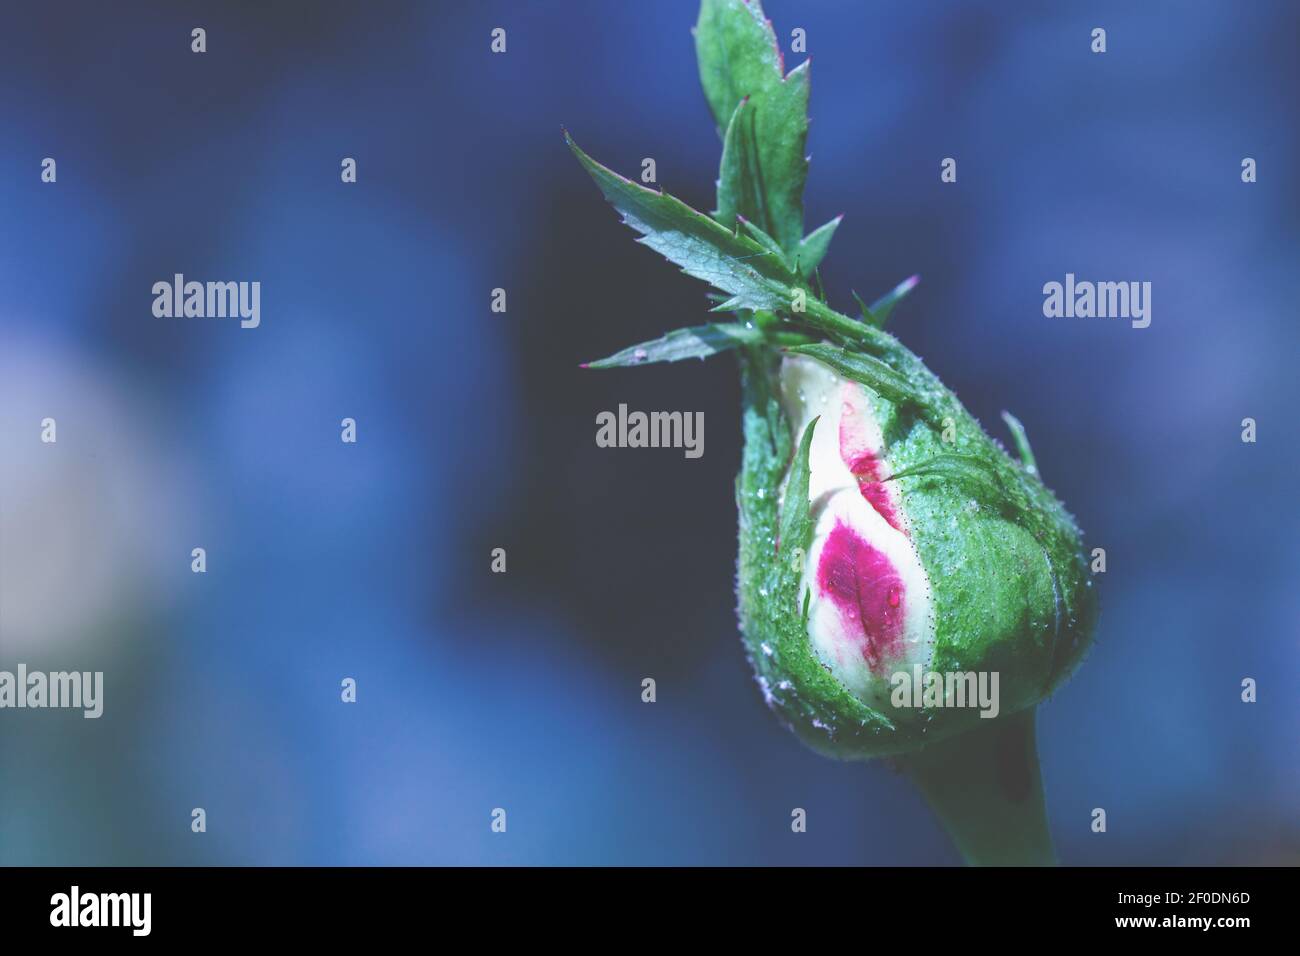 Rosebud against a dark blue blurred background Stock Photo